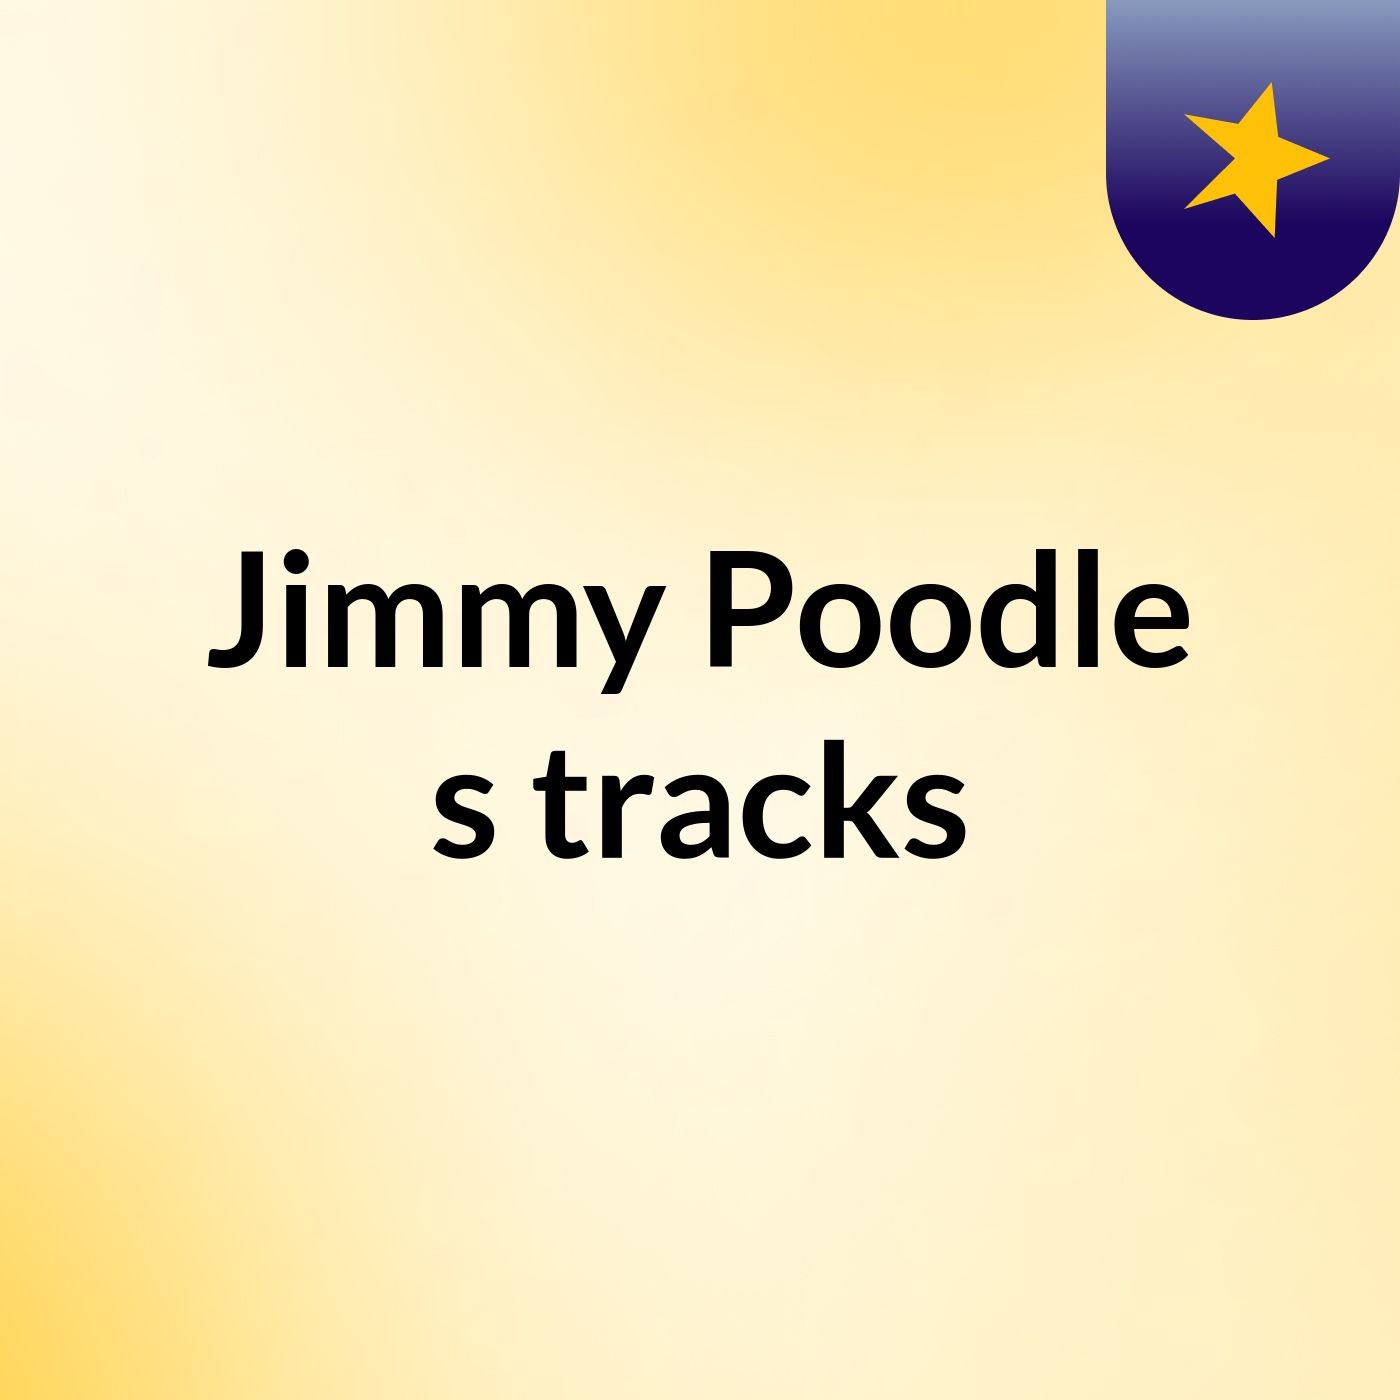 Jimmy Poodle's tracks